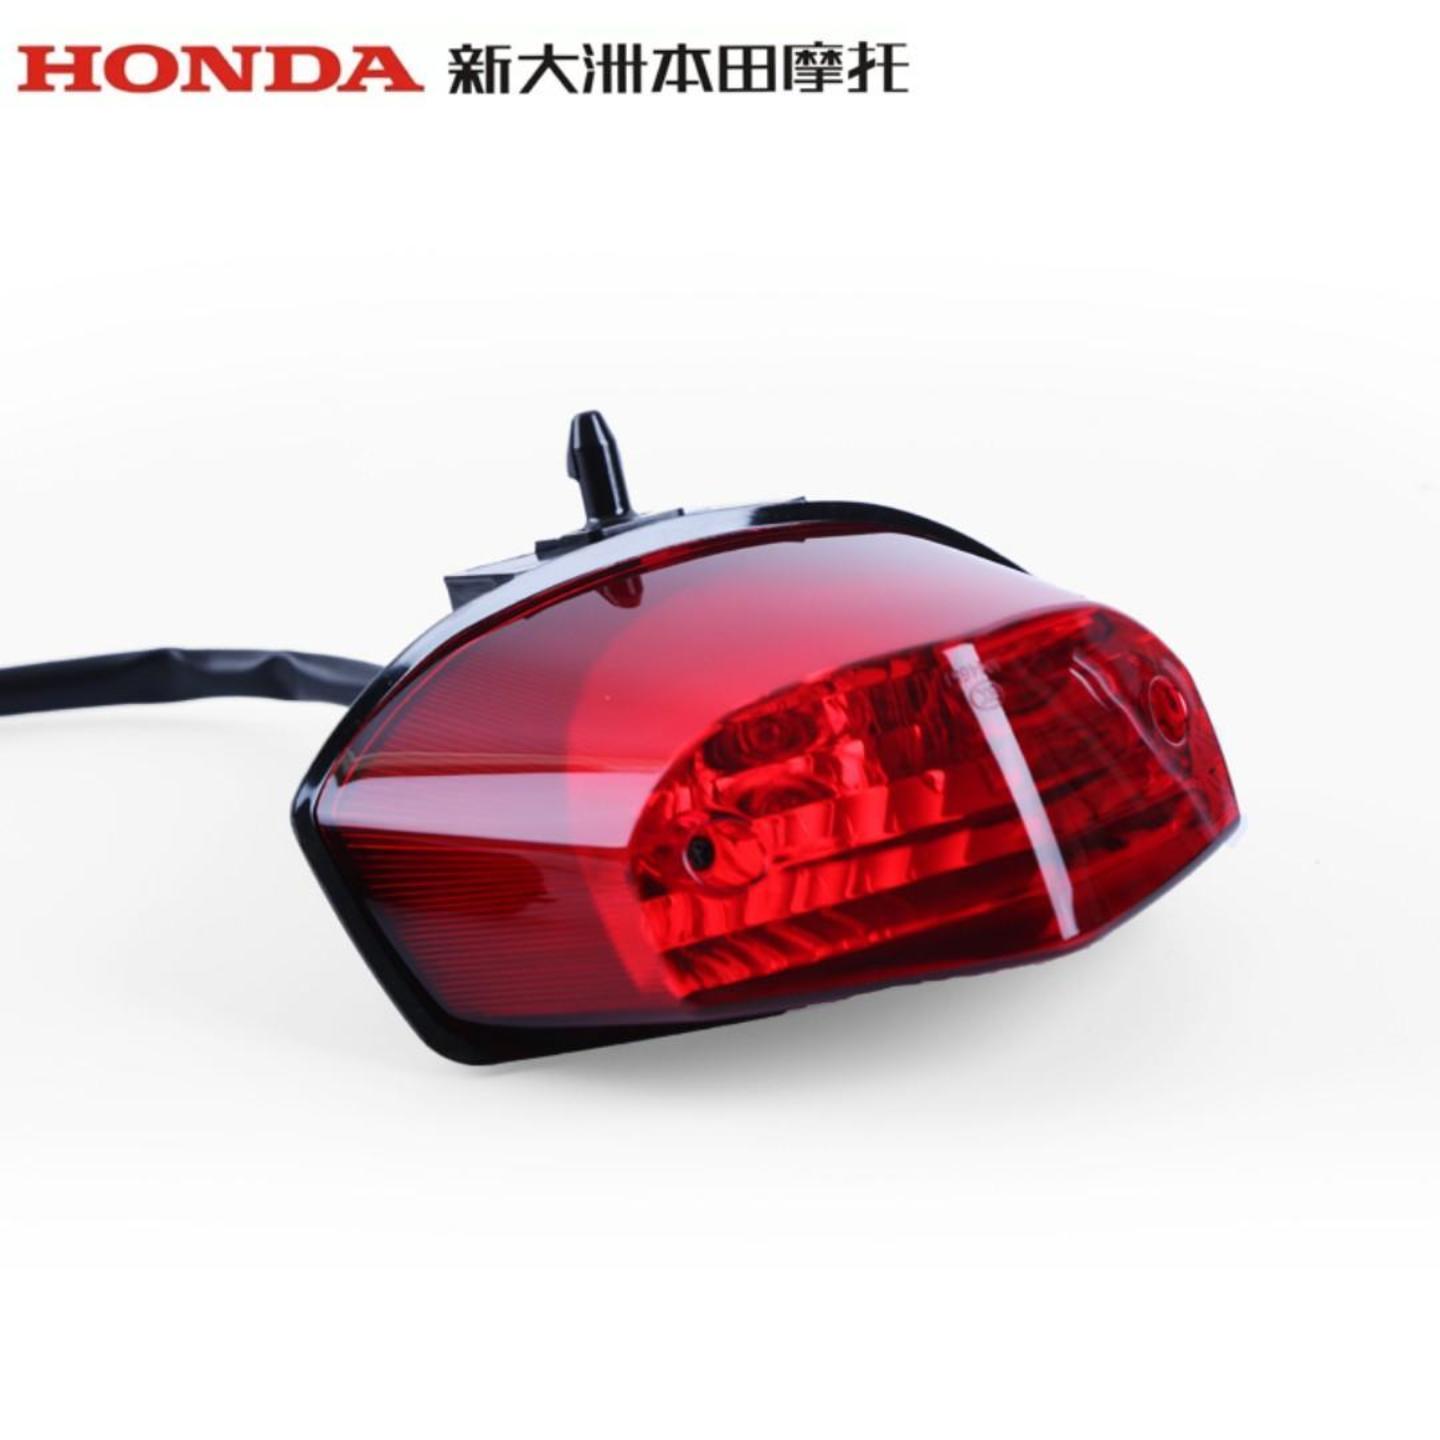 Honda CBF190X tail light